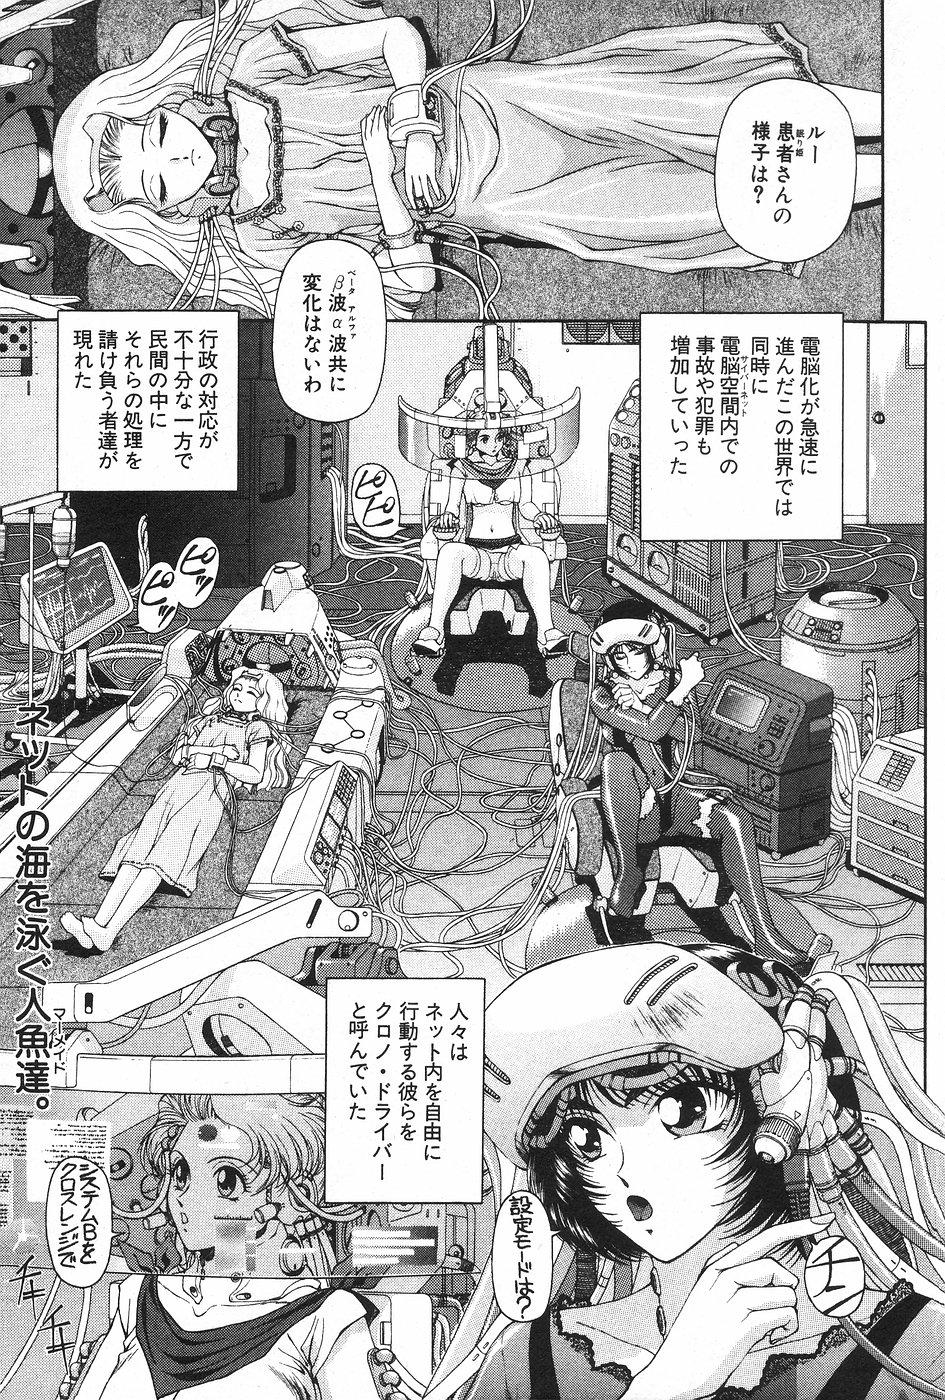 Manga Hotmilk 1997-04 54